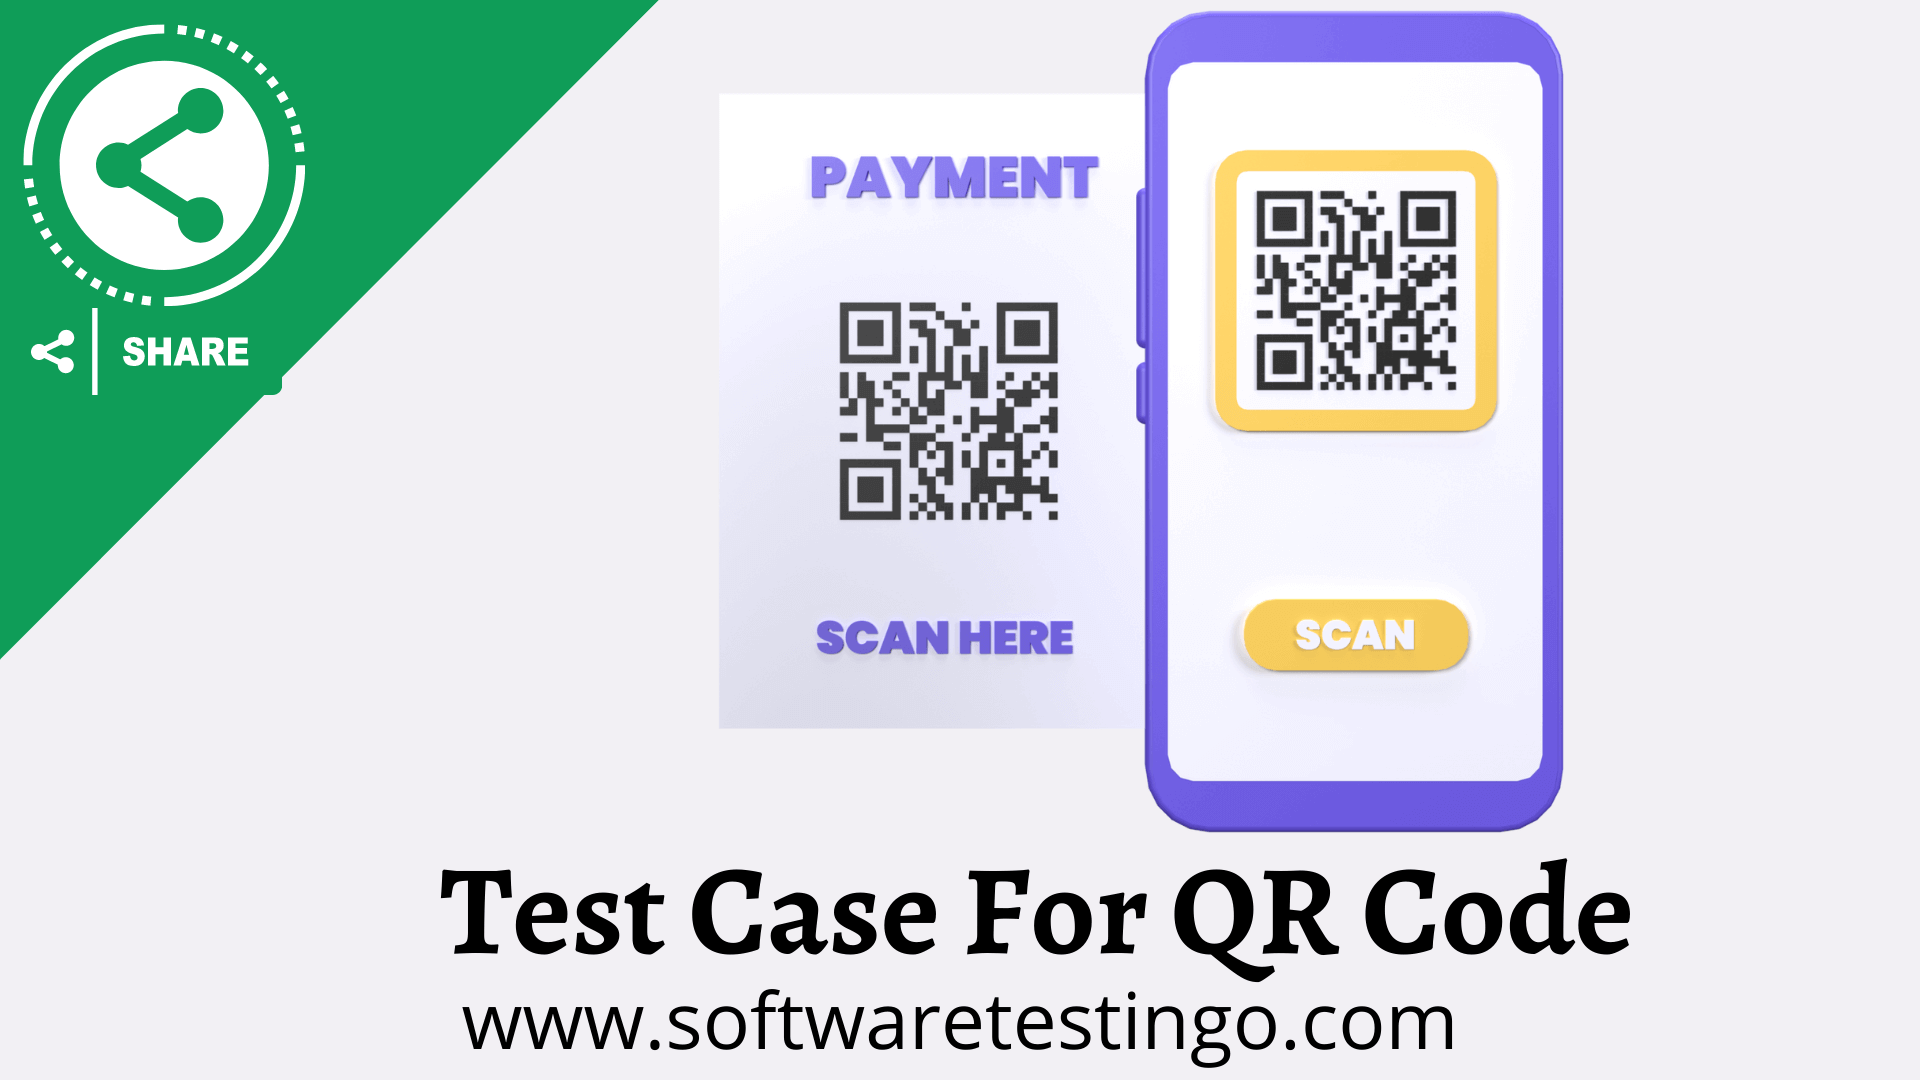 Test Case For QR Code